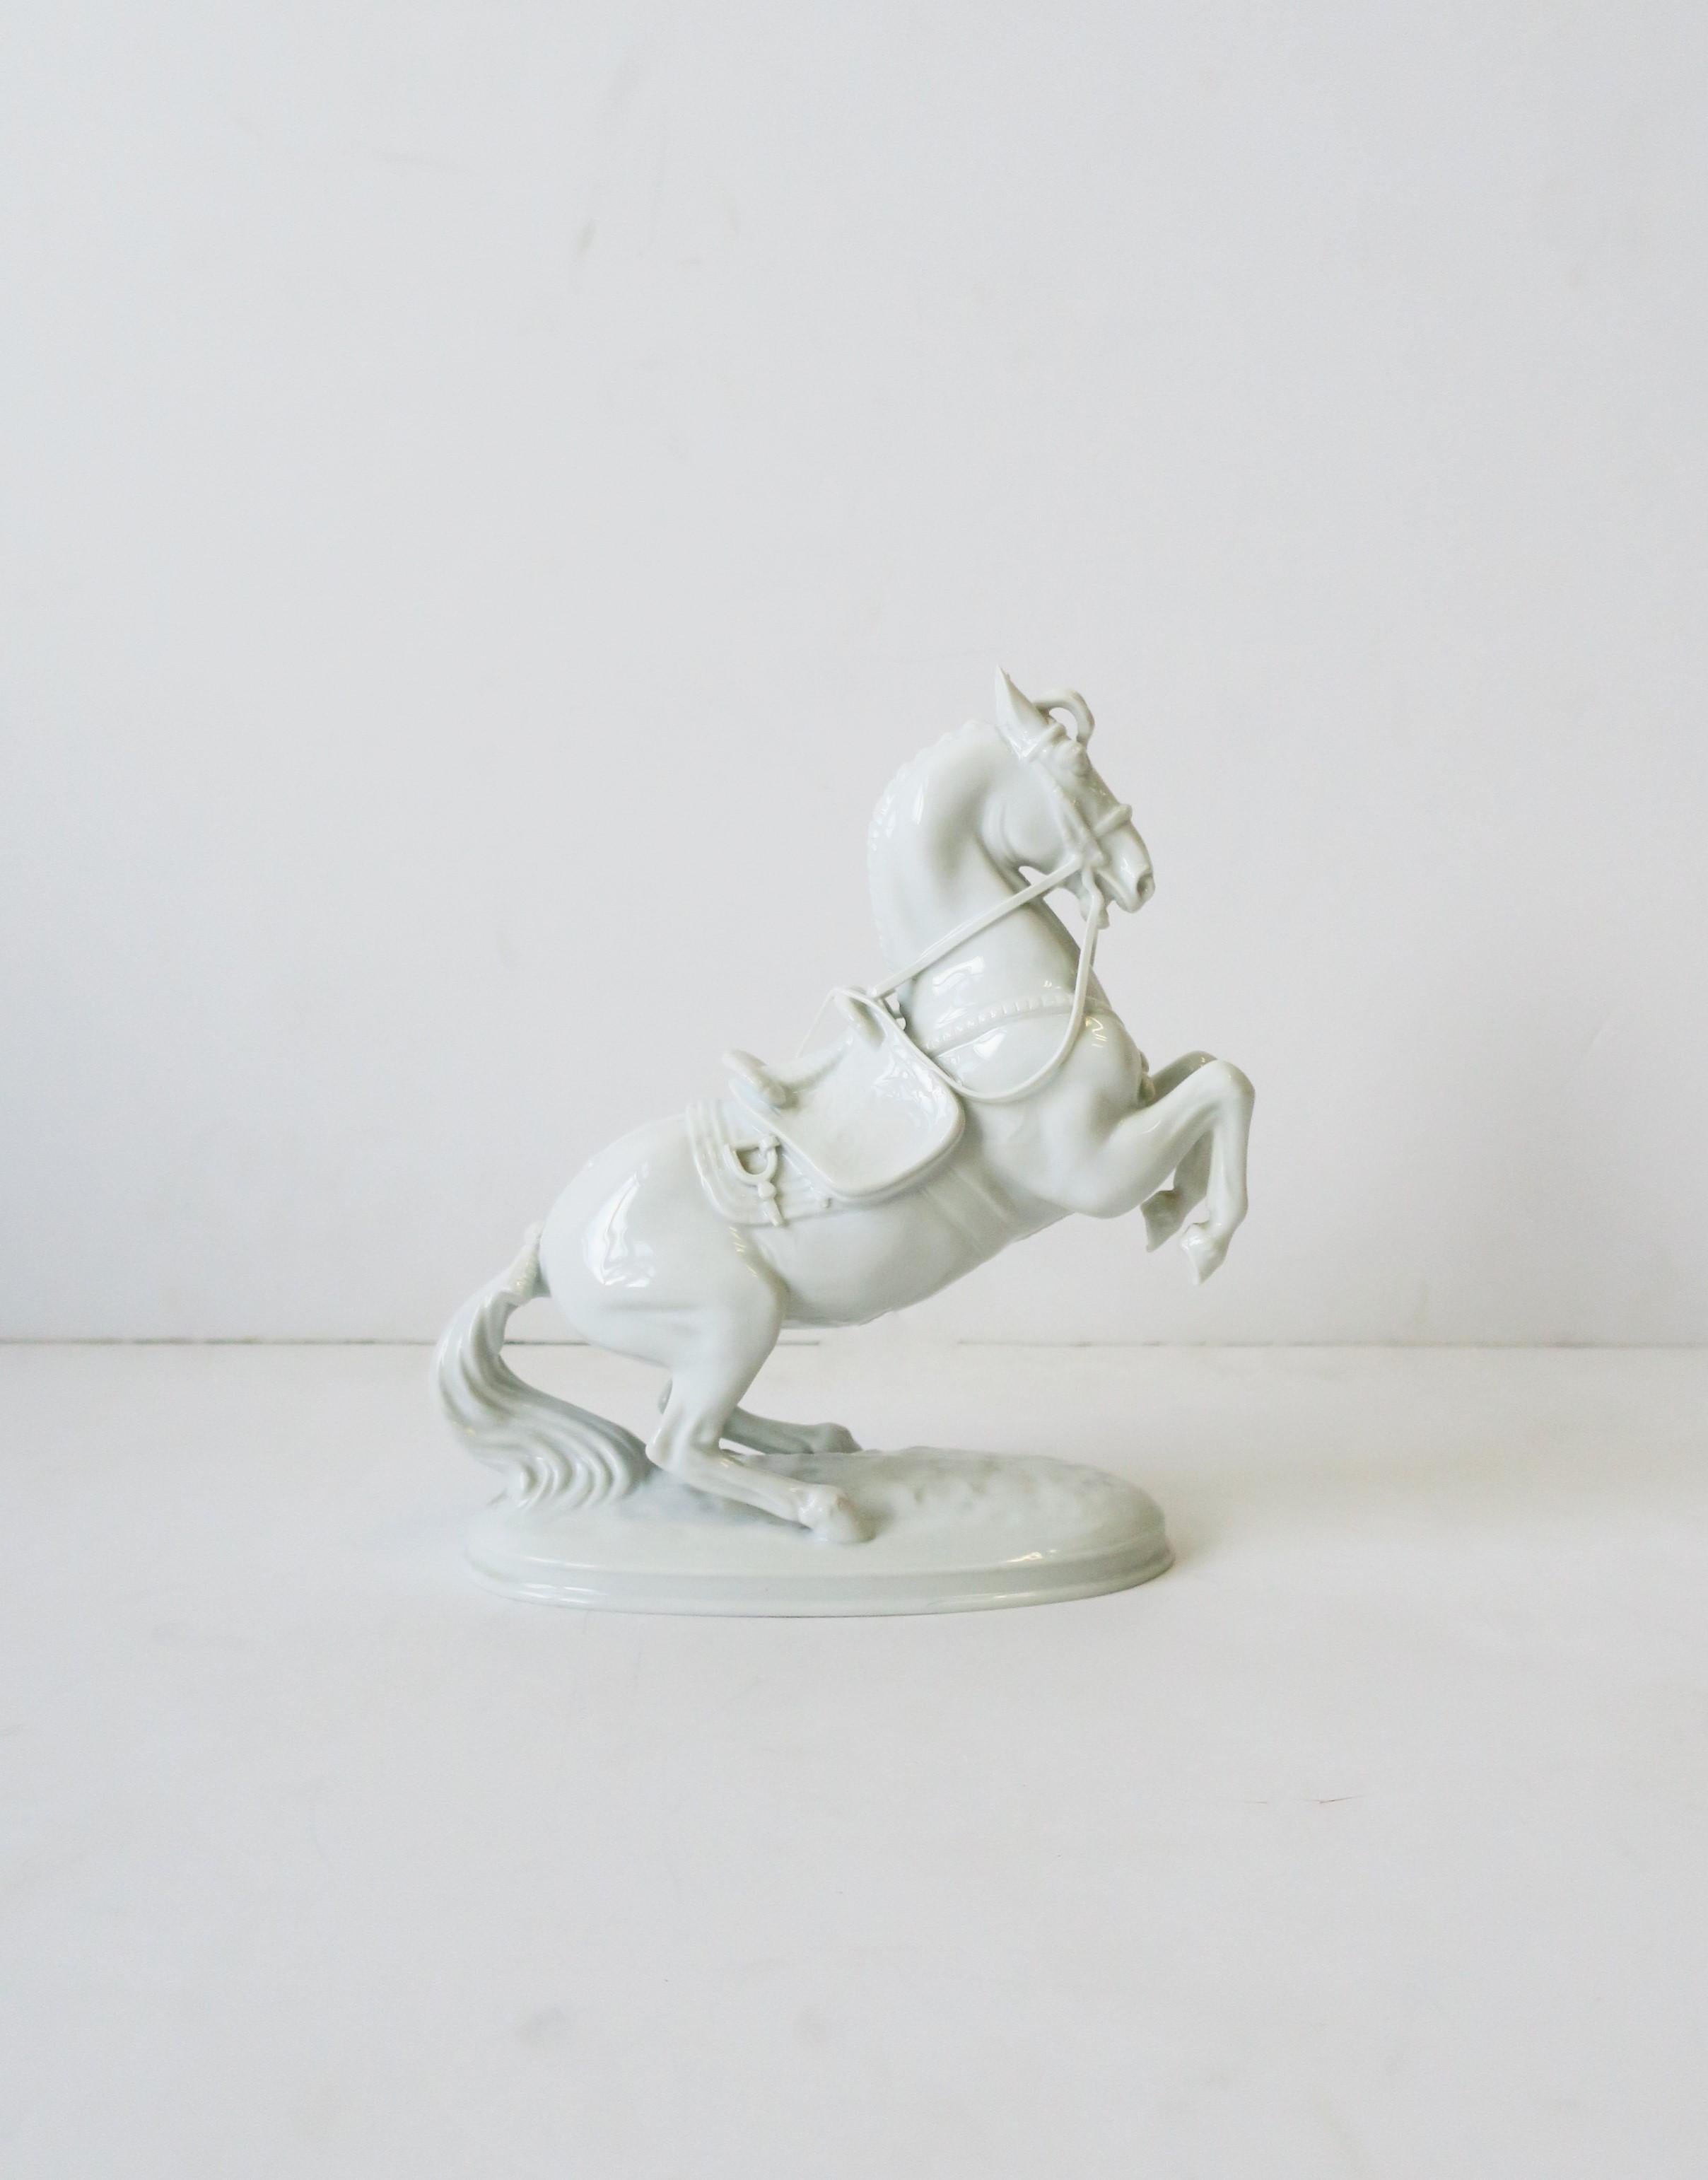 20th Century White Porcelain Equine Horse Sculpture Decorative Object from Austria 